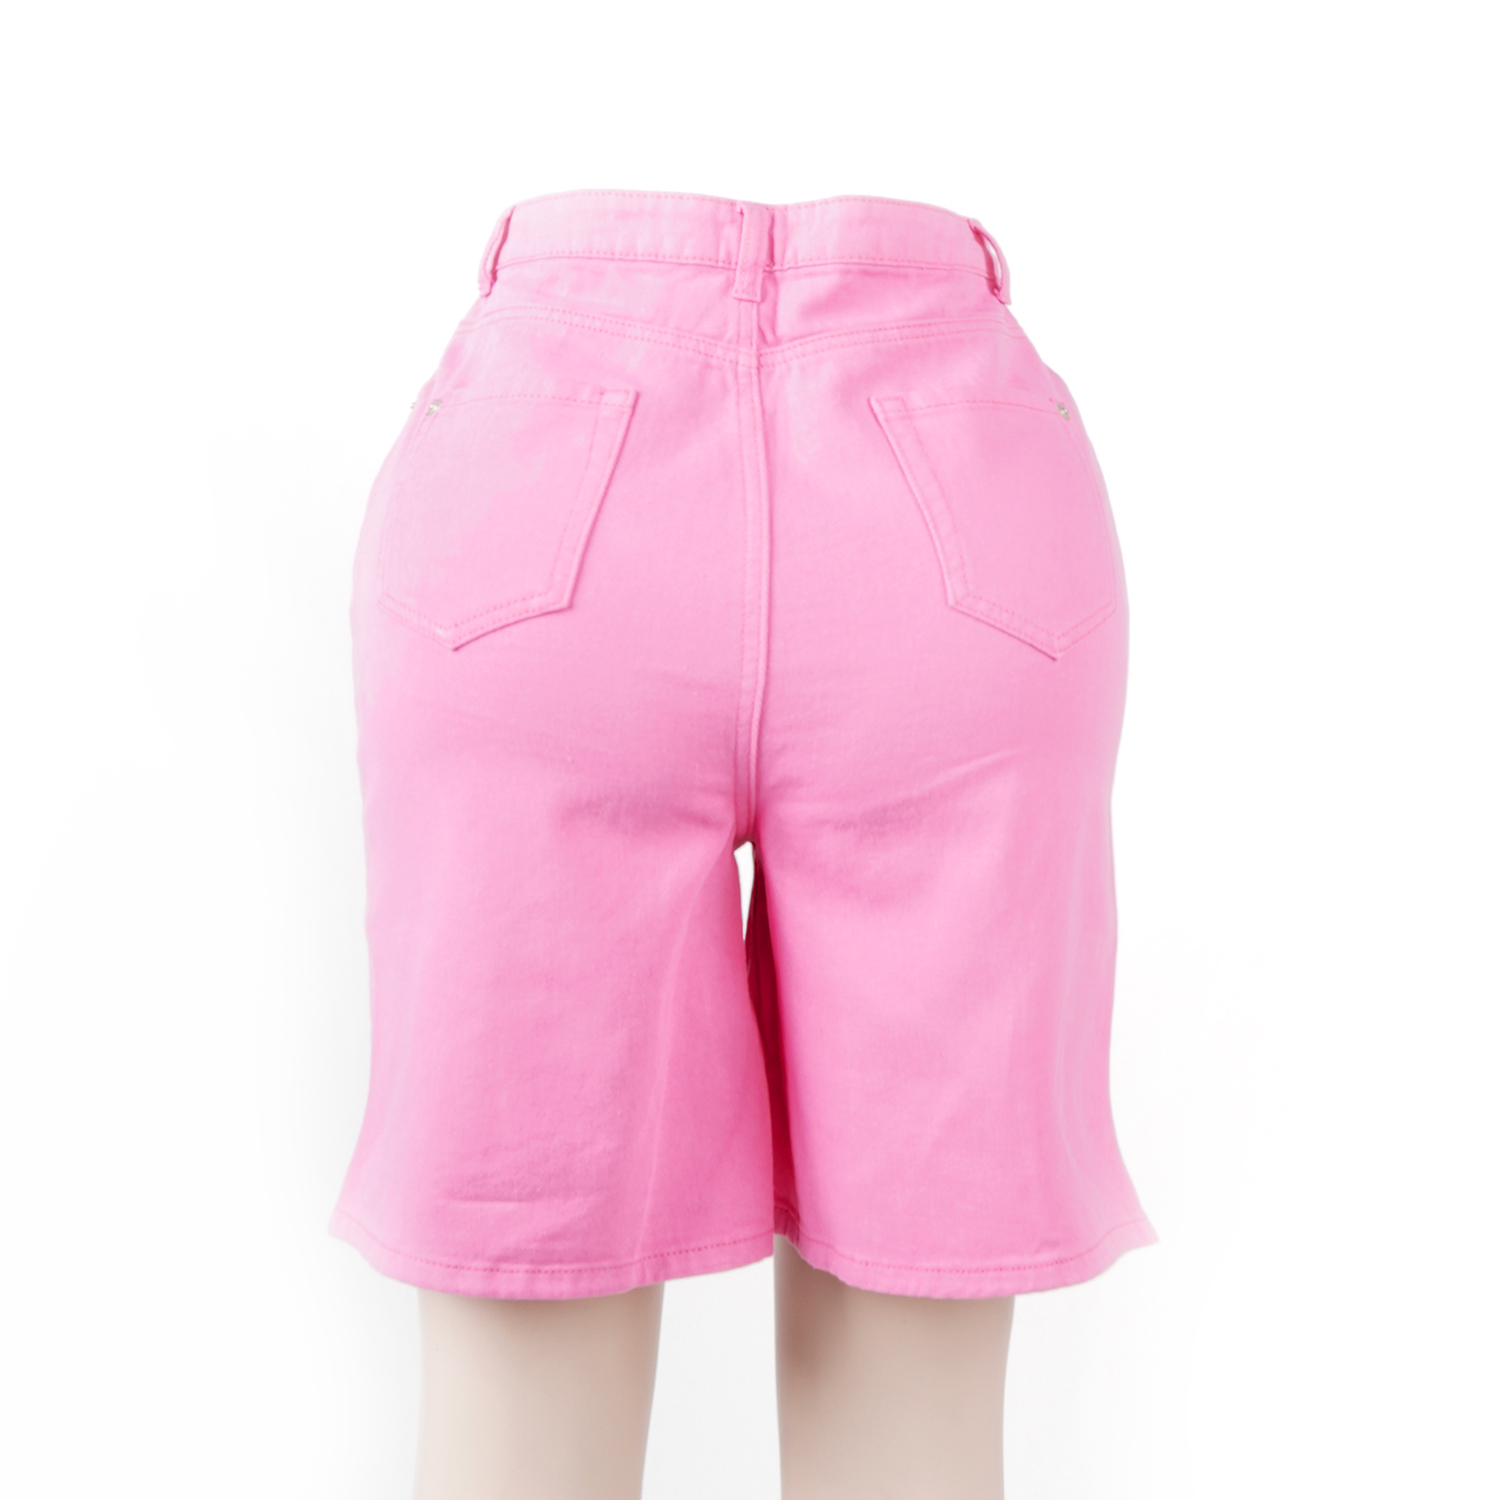 SKYKINGDOM new fashion summer sexy lady short jeans high rise butt lifting pink skinny denim shorts